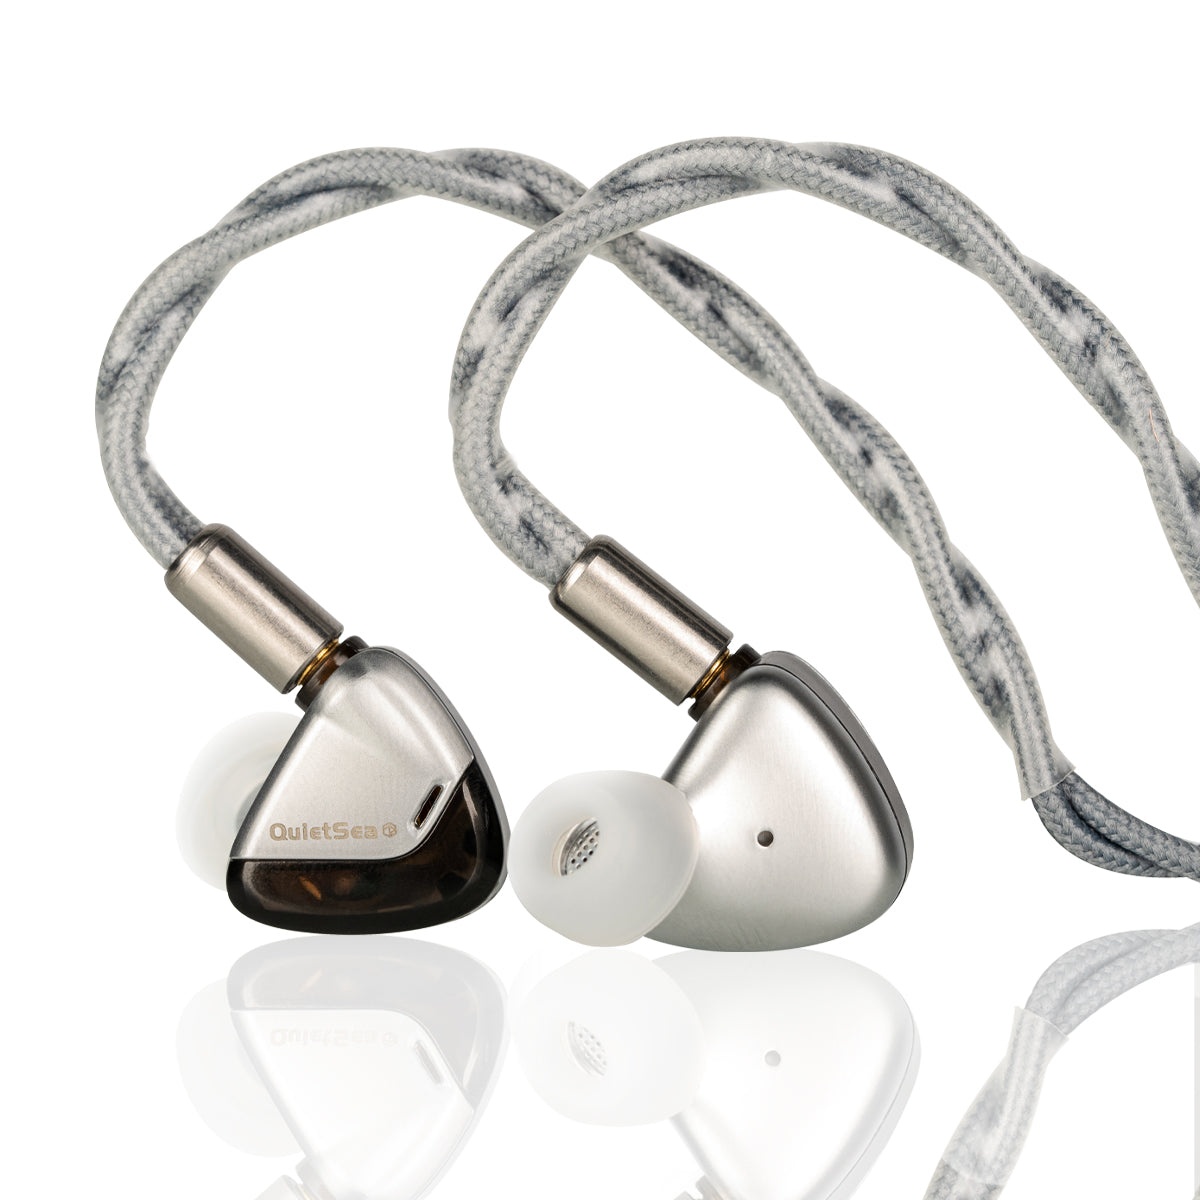 ROSE TECHNICS QuietSea HiFi In Ear Headphones Dynamic Driver Ear Monitor IEM MMCX Wired Earphones